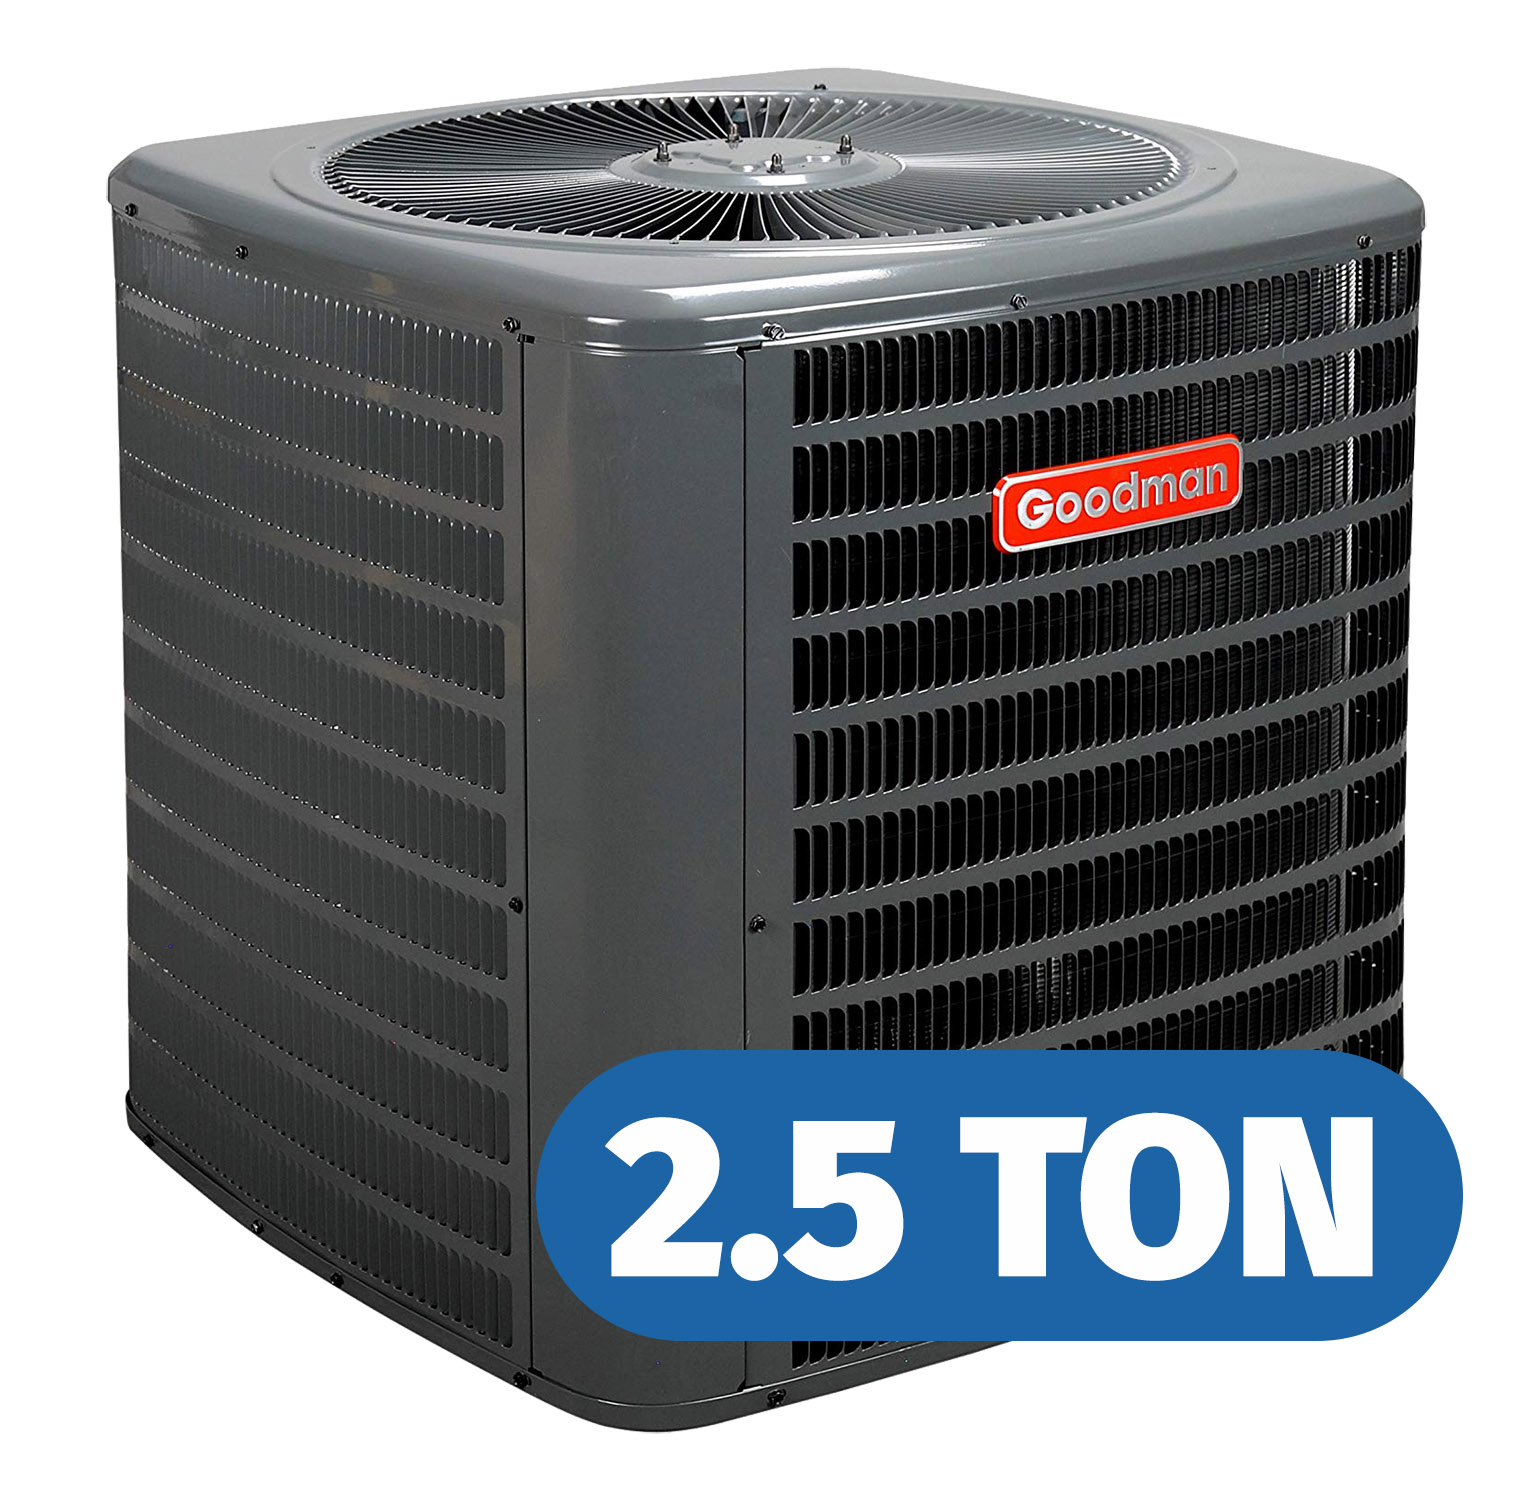 Goodman 2.5 Ton Air Conditioners 